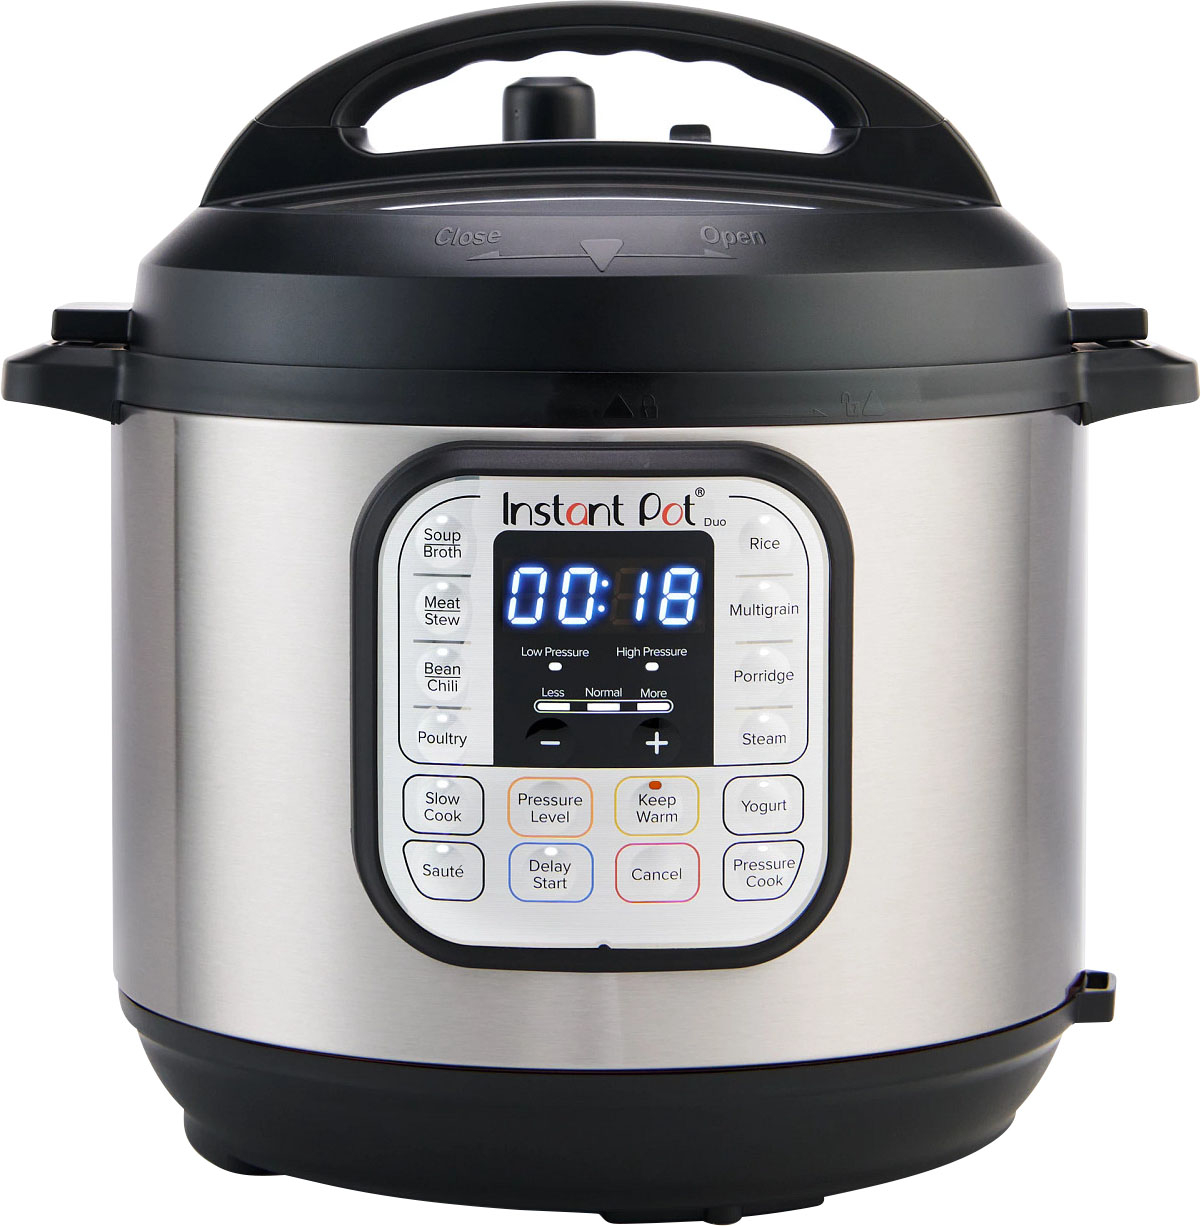 Instant Pot slow cooker lid review